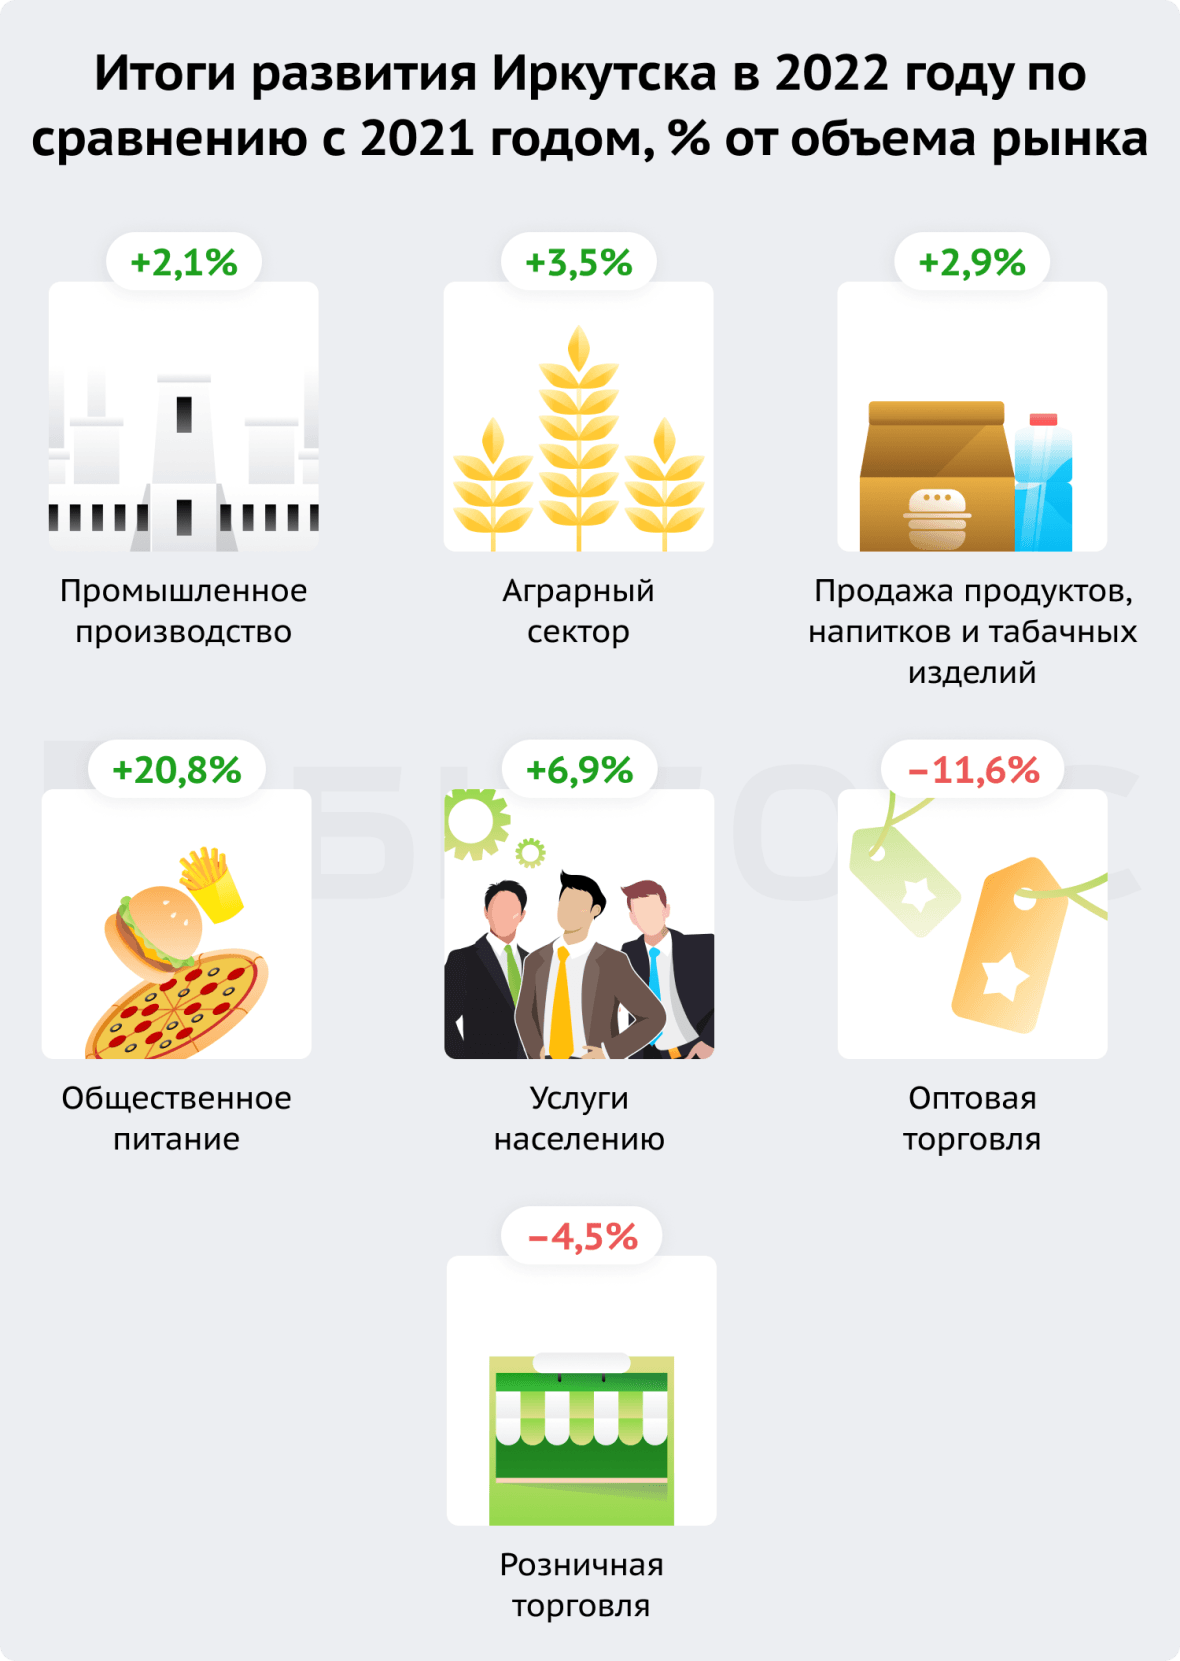 Итоги развития Иркутска в 2022 году по сравнению с 2021 годом, % от объема рынка